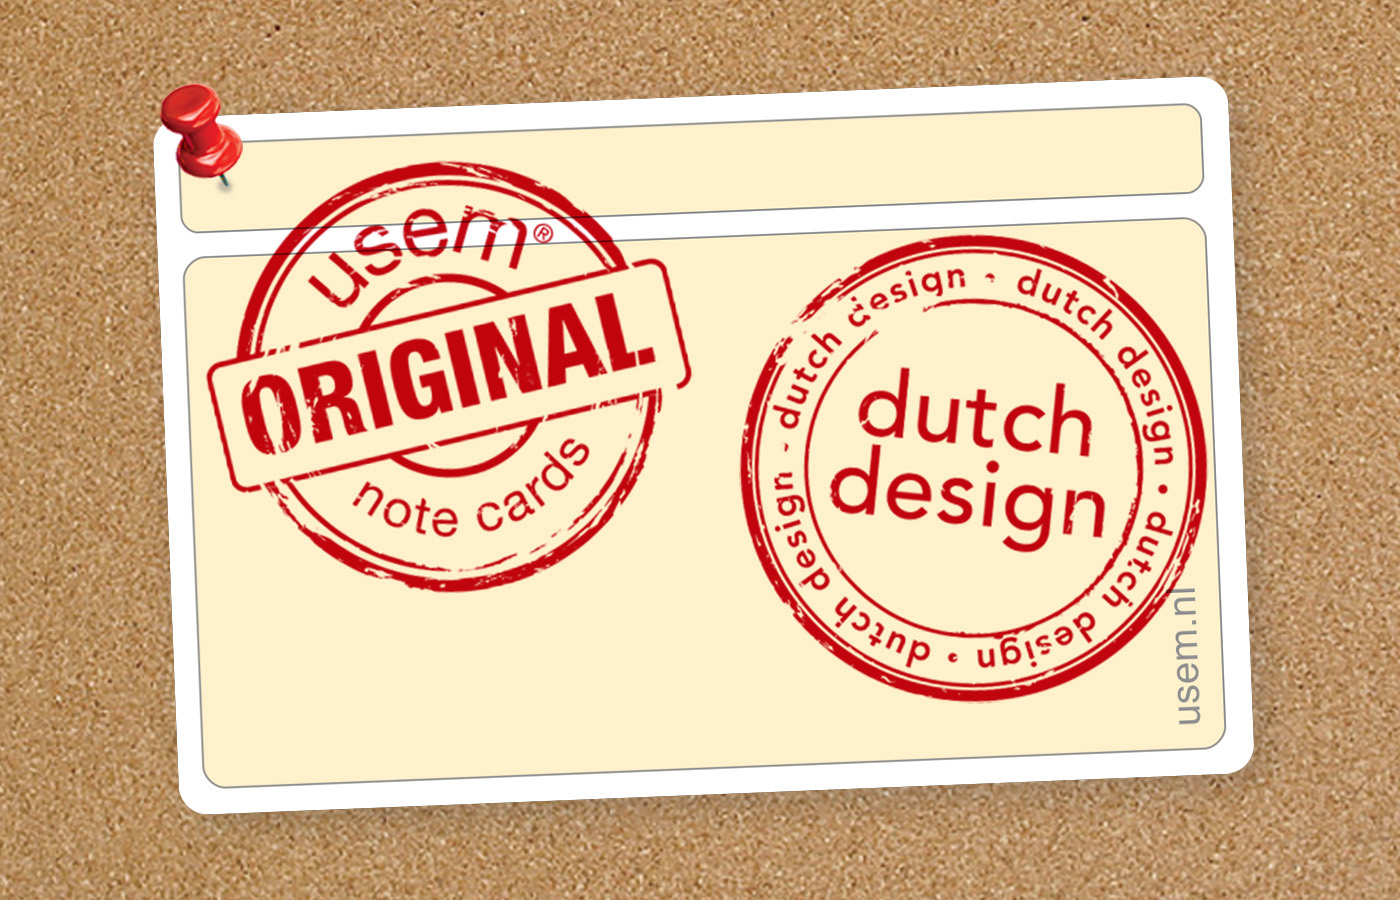 Usem original note card with dutch design stamp